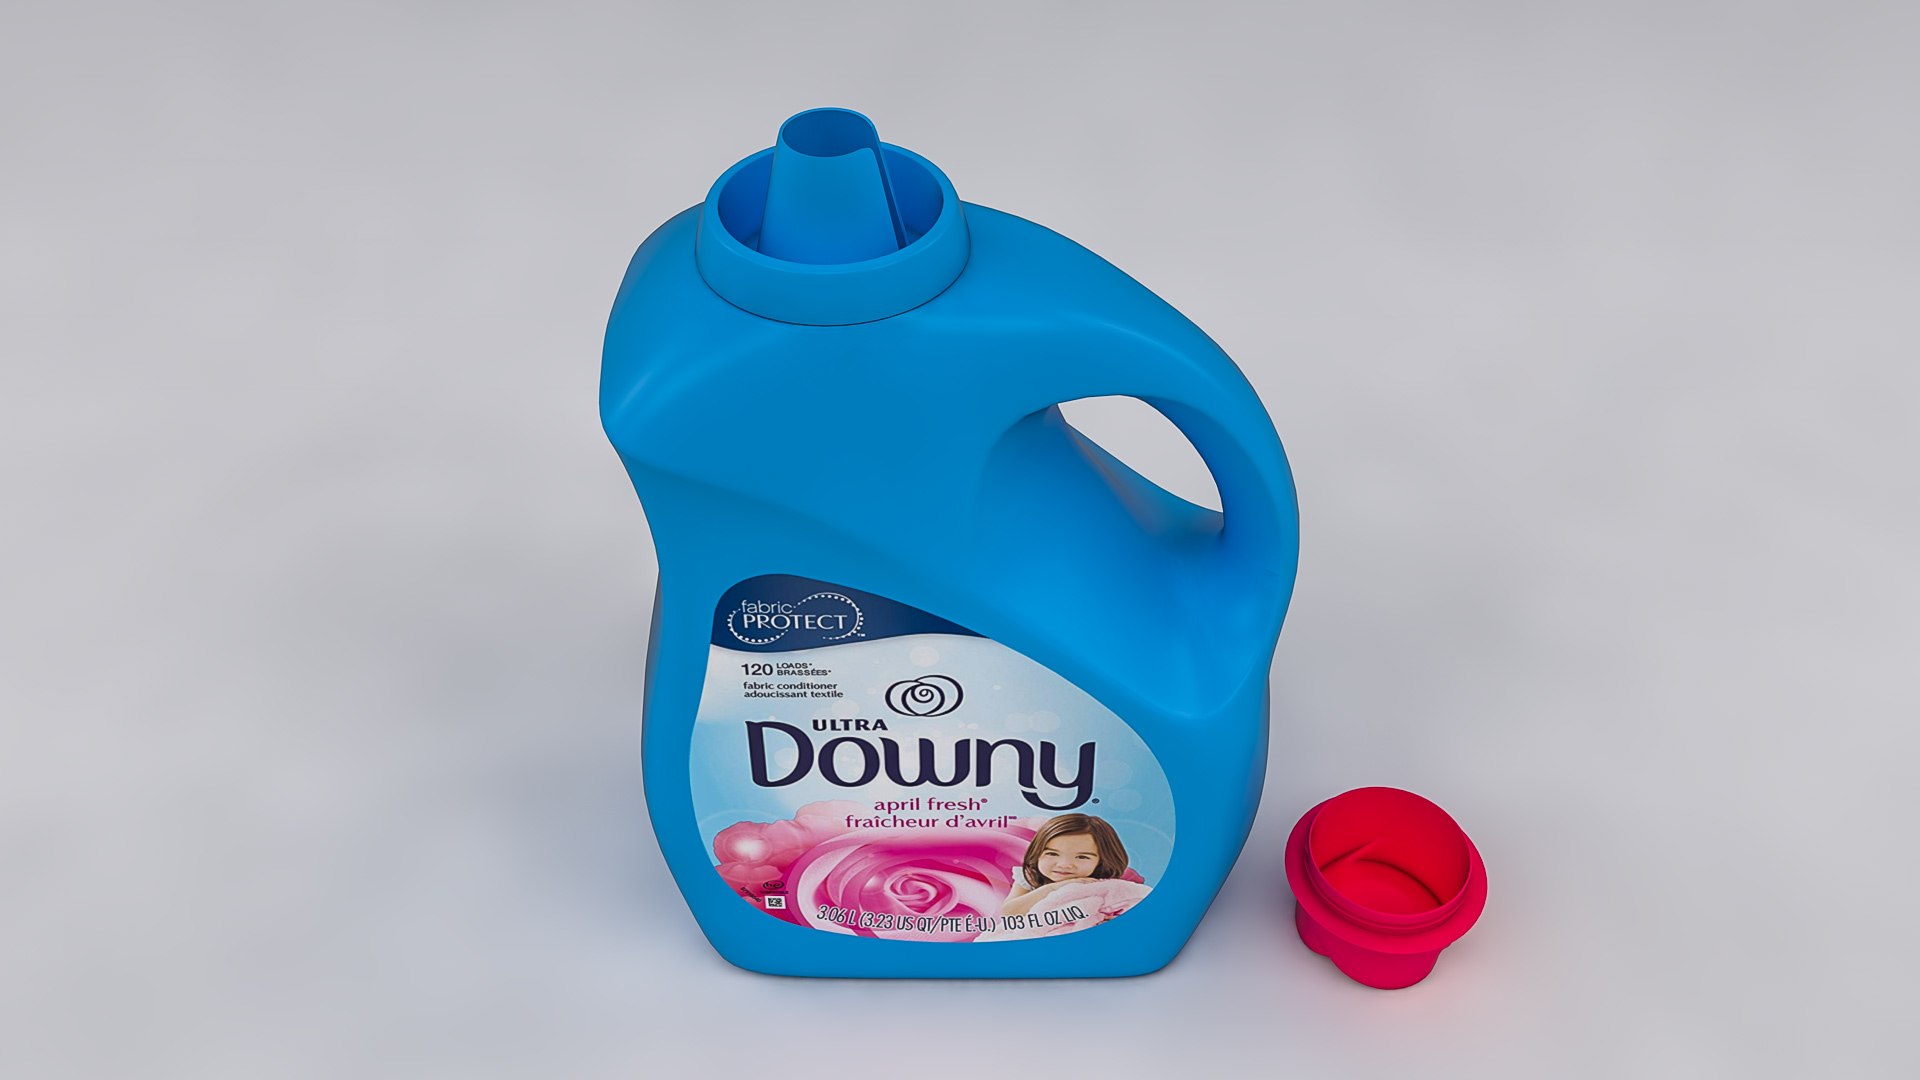 Downy April Fresh, 120 Loads Liquid Fabric Softener, 103 Fl Oz